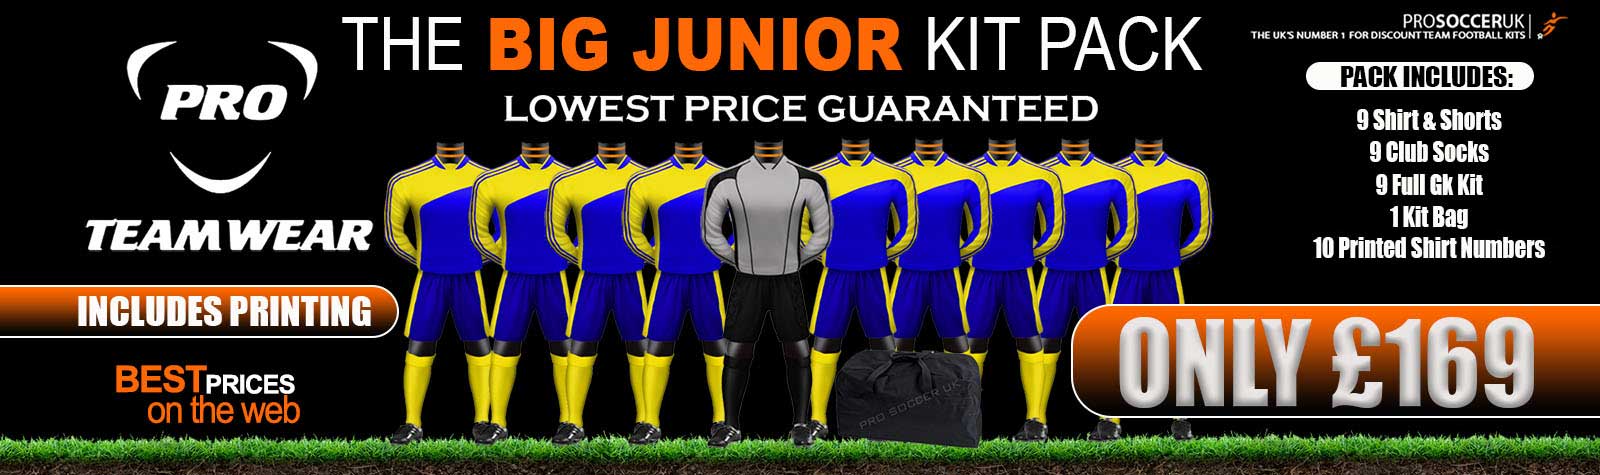 Cheap Kids Football Kits